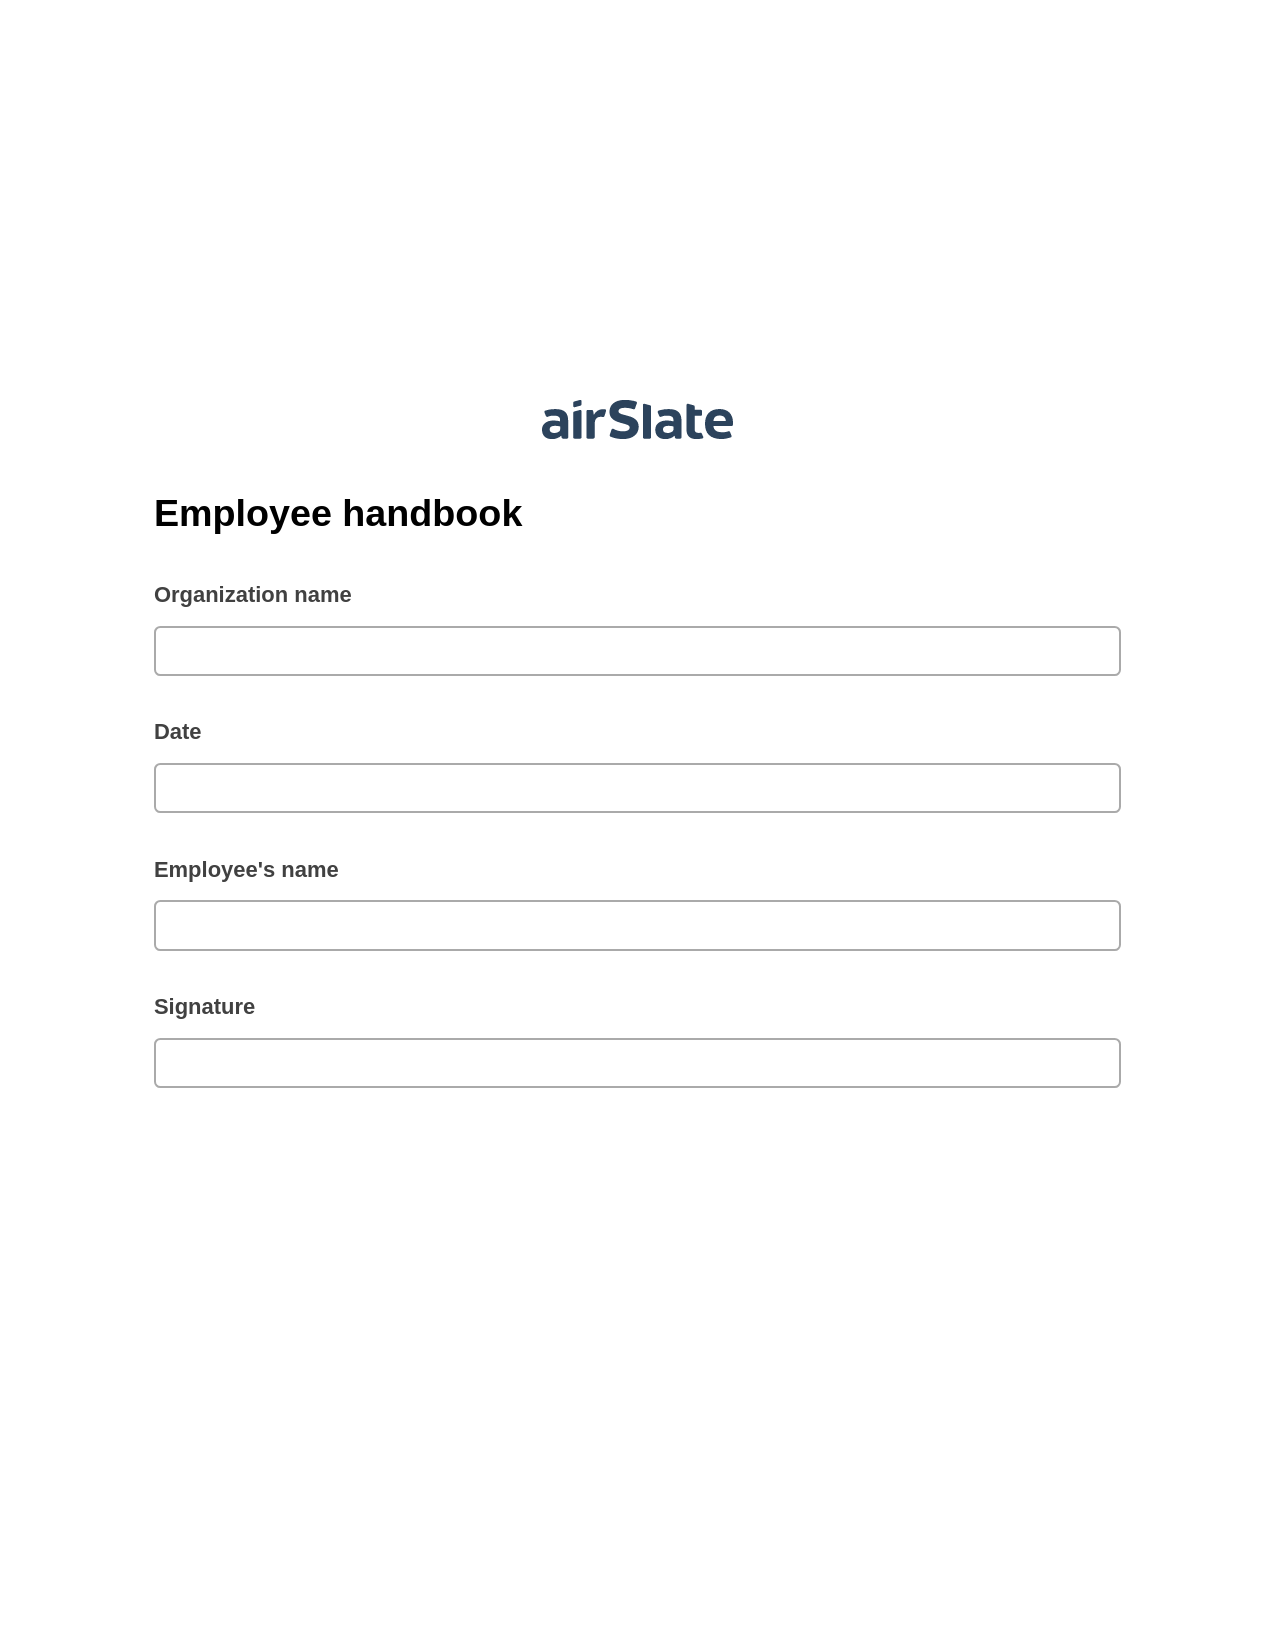 Multirole Employee handbook Pre-fill from CSV File Bot, Create Slate Reminder Bot, Archive to SharePoint Folder Bot